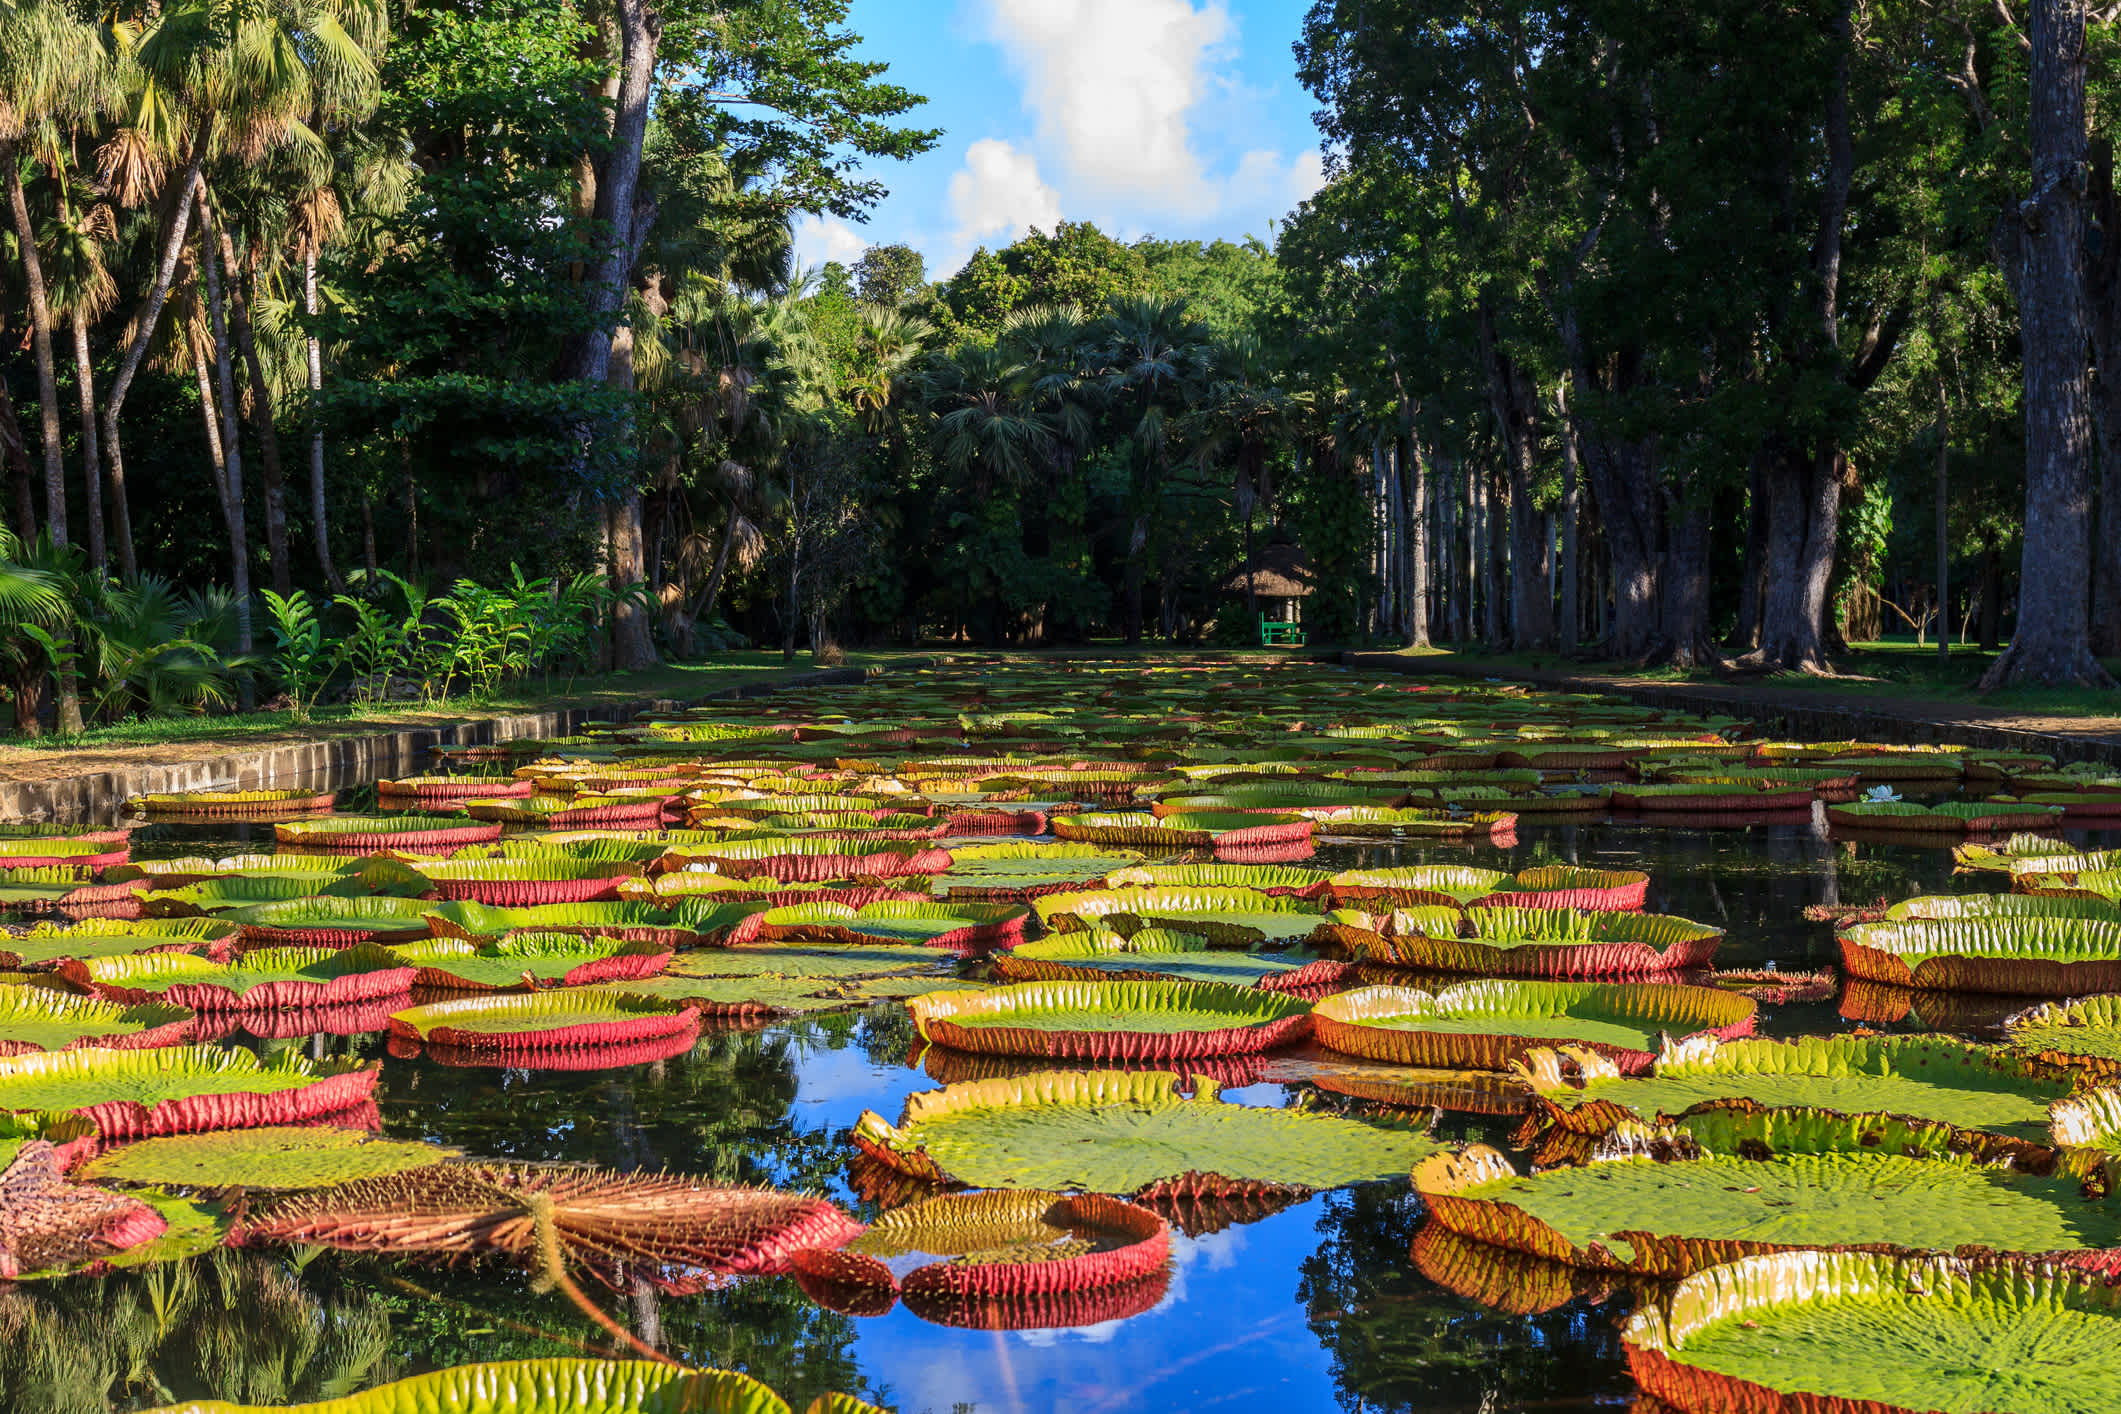 Seerosen in Pamplemousses Boticanal Gardens, Mauritius

